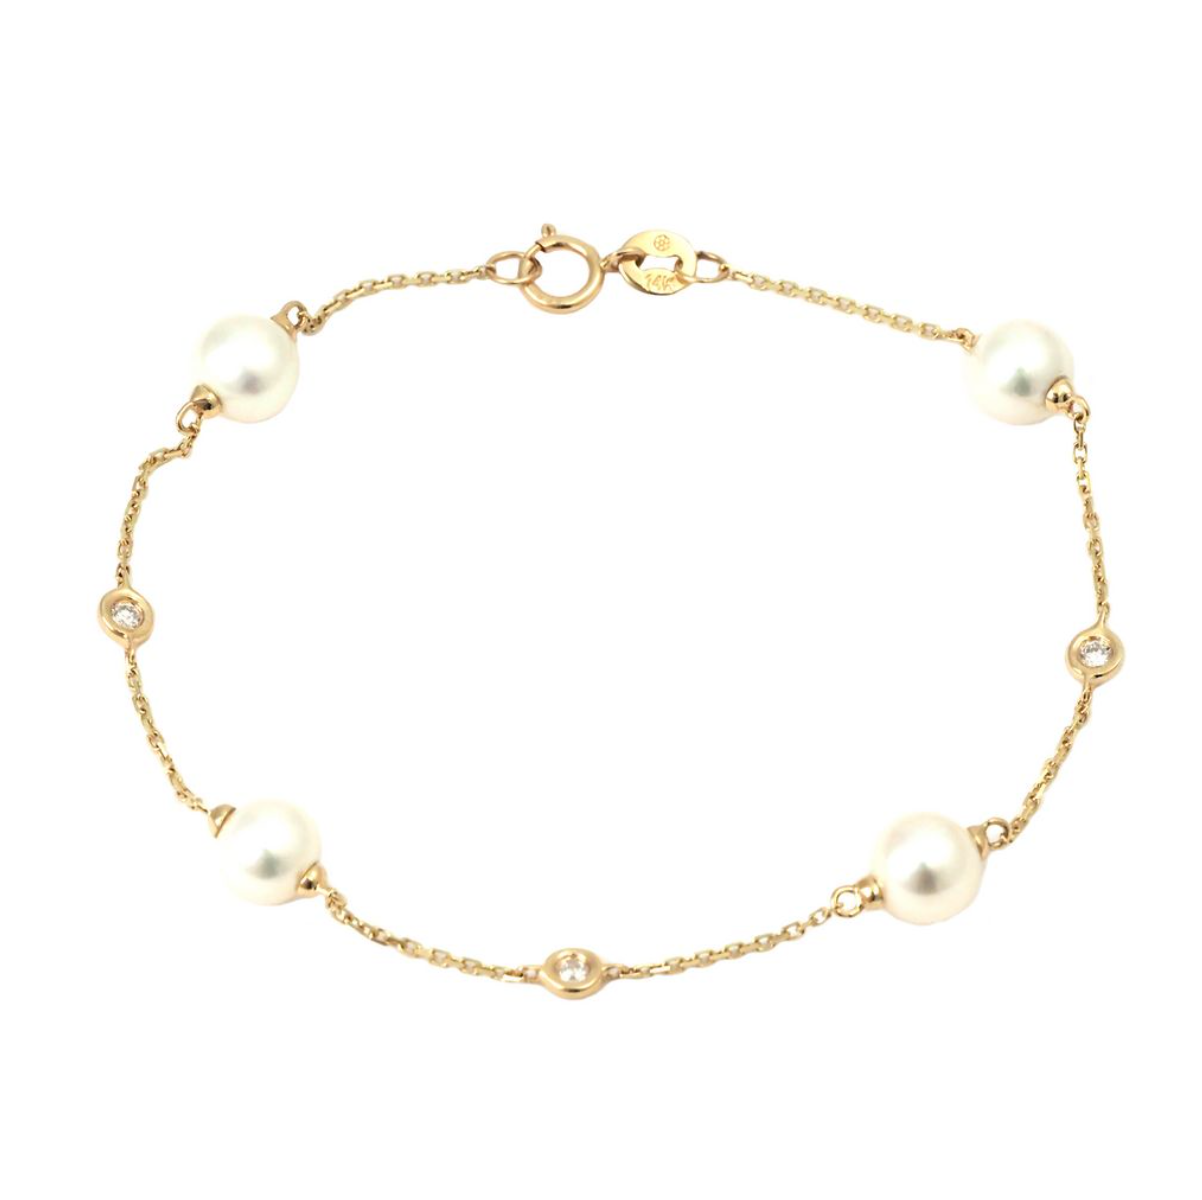 Bracelet - Diamonds and Pearls 7" - 14k